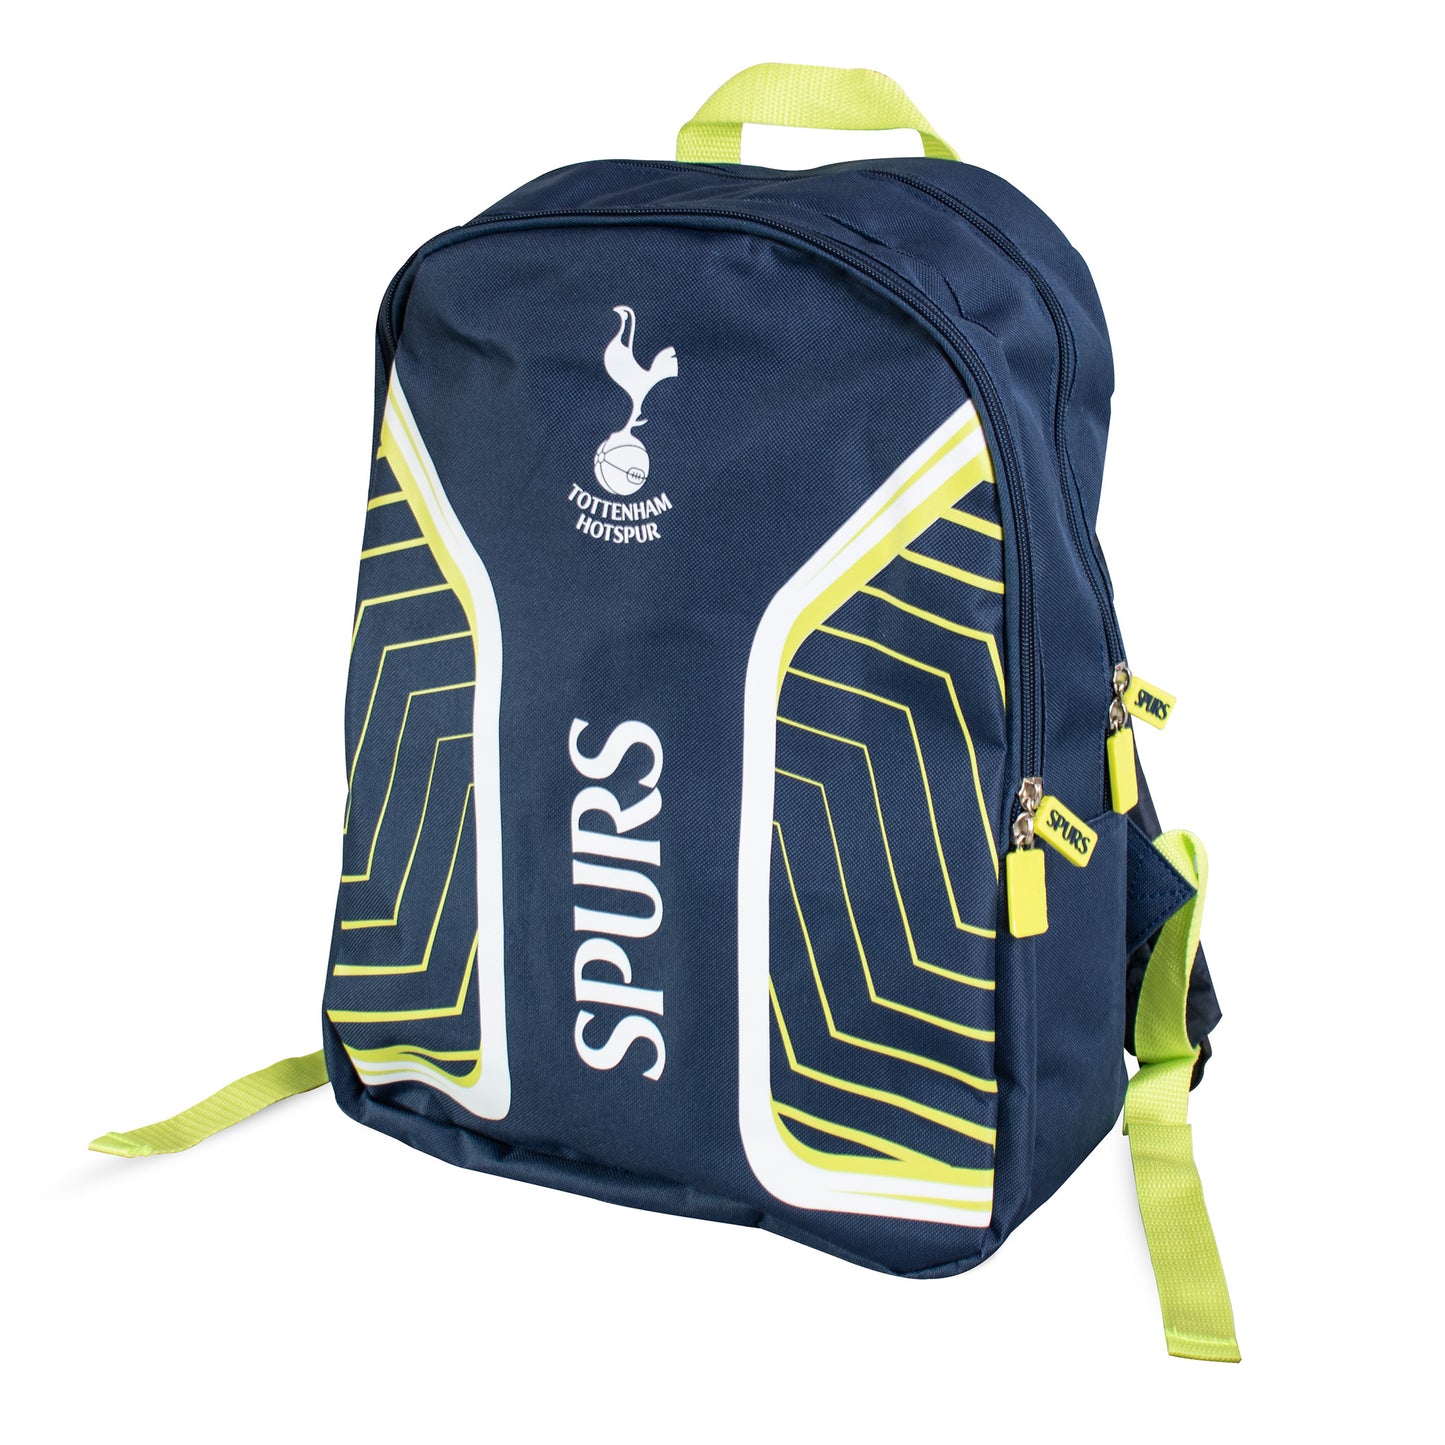 Tottenham Hotspur Flash Large Backpack